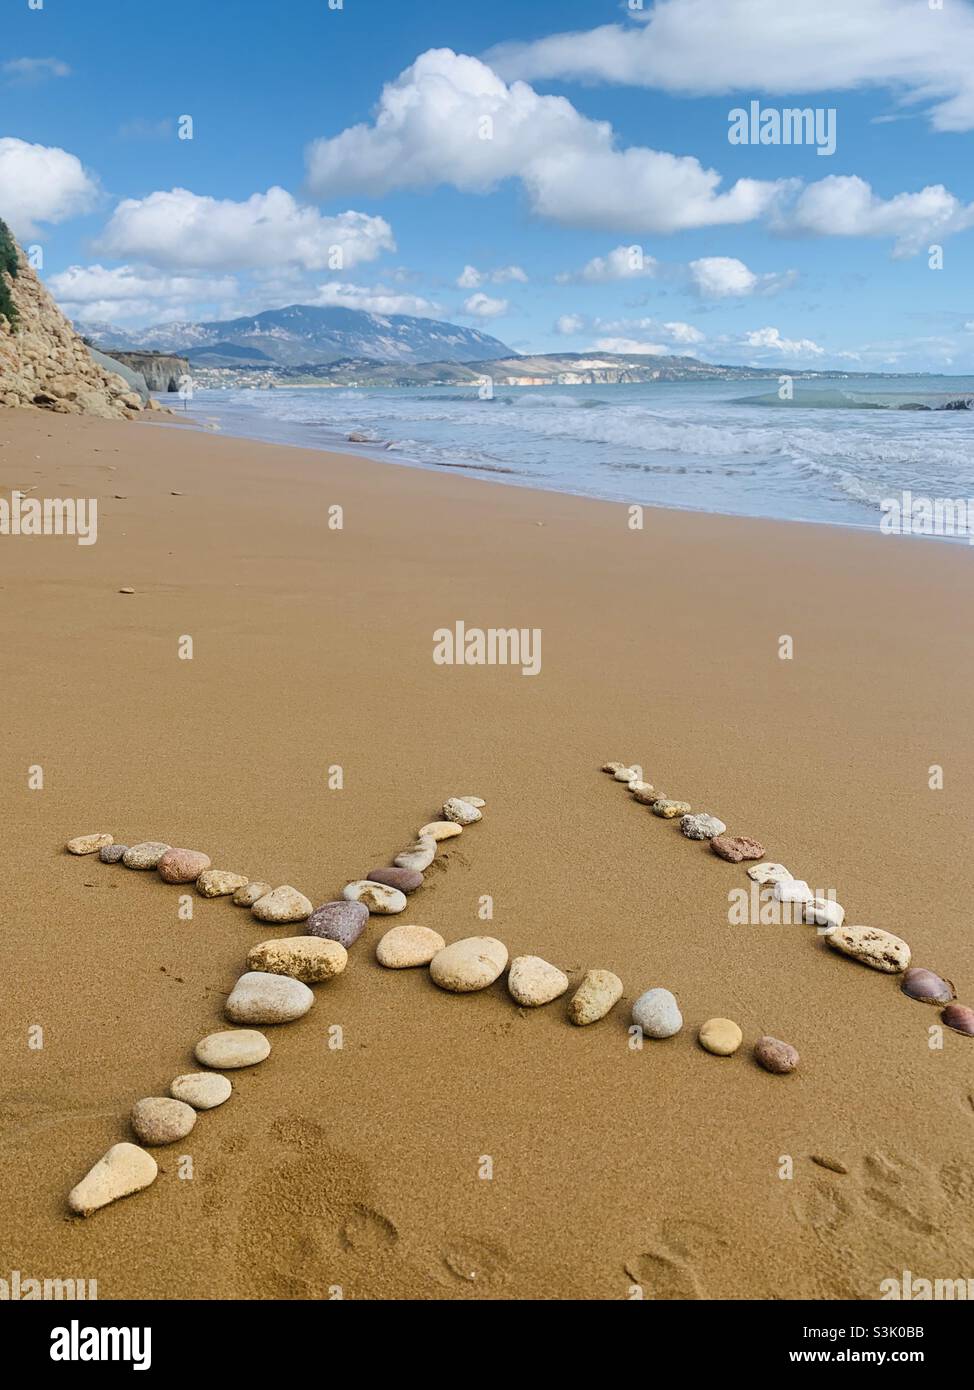 Stones spelling Xi on the beach in kefalonia Stock Photo